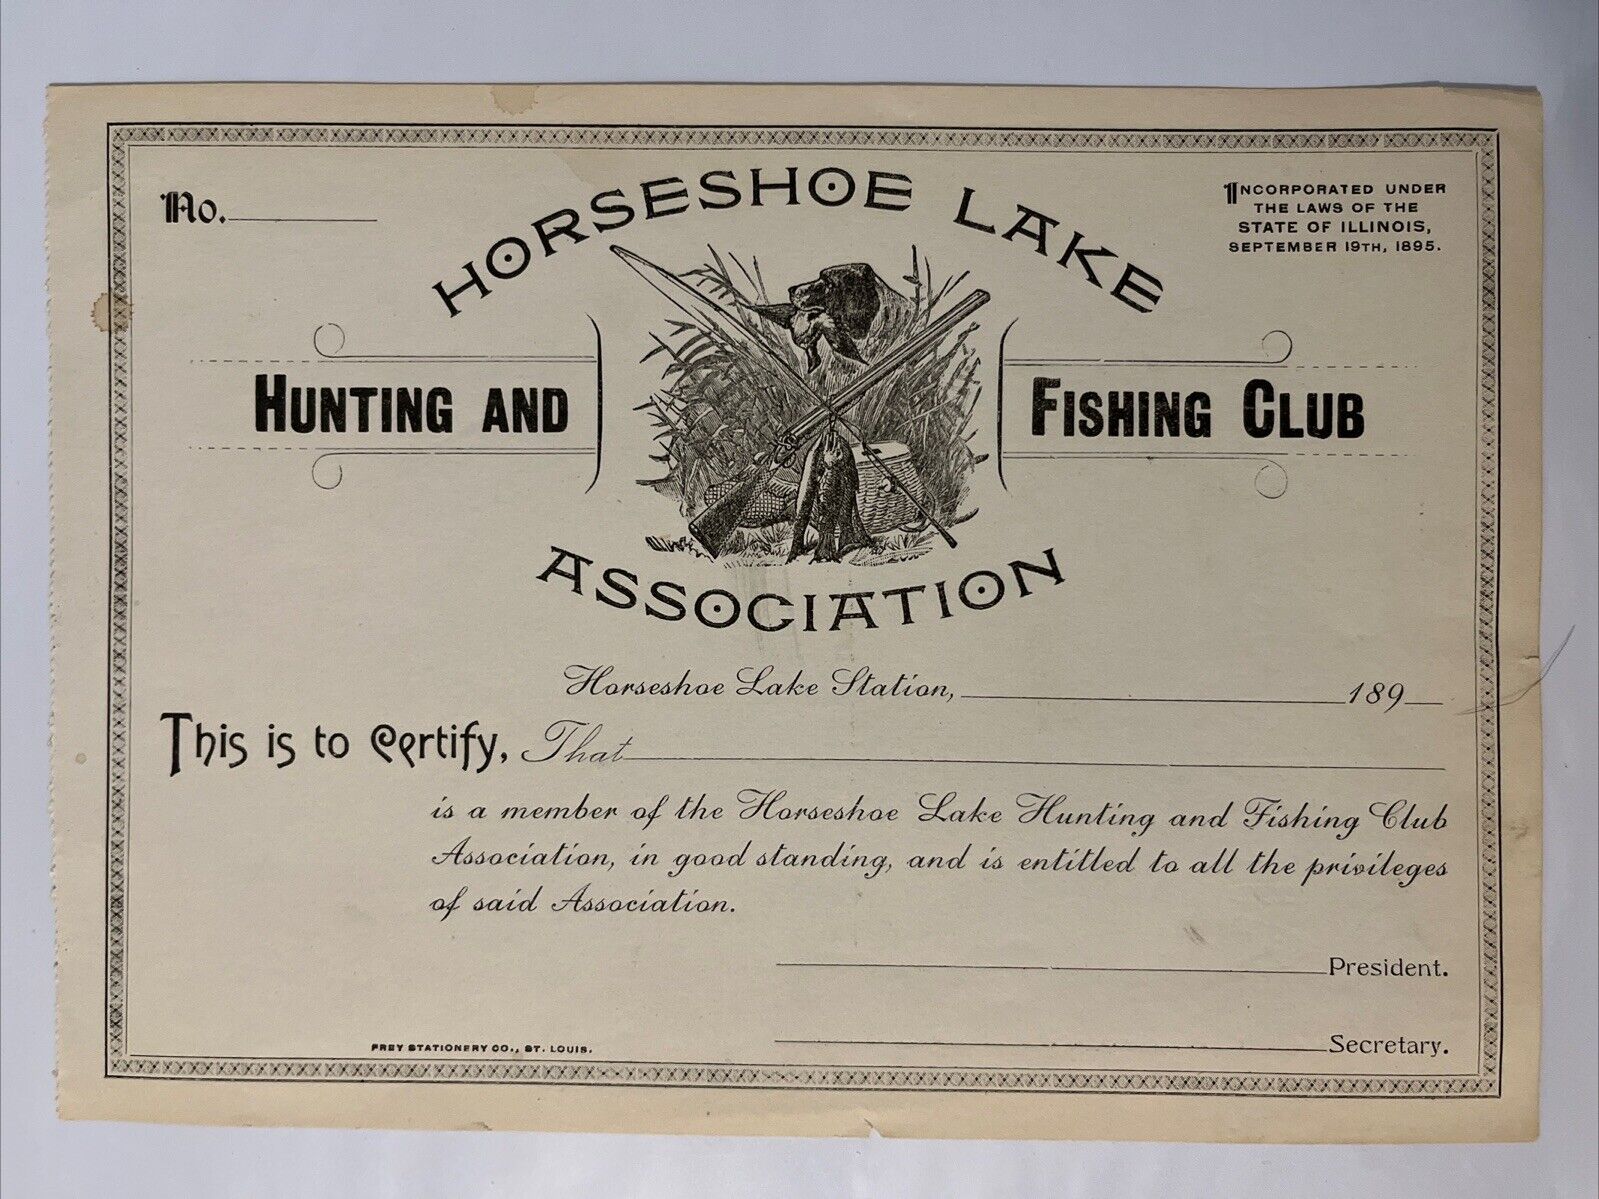 Horseshoe Lake Hunting and Fishing Club Association Certificate